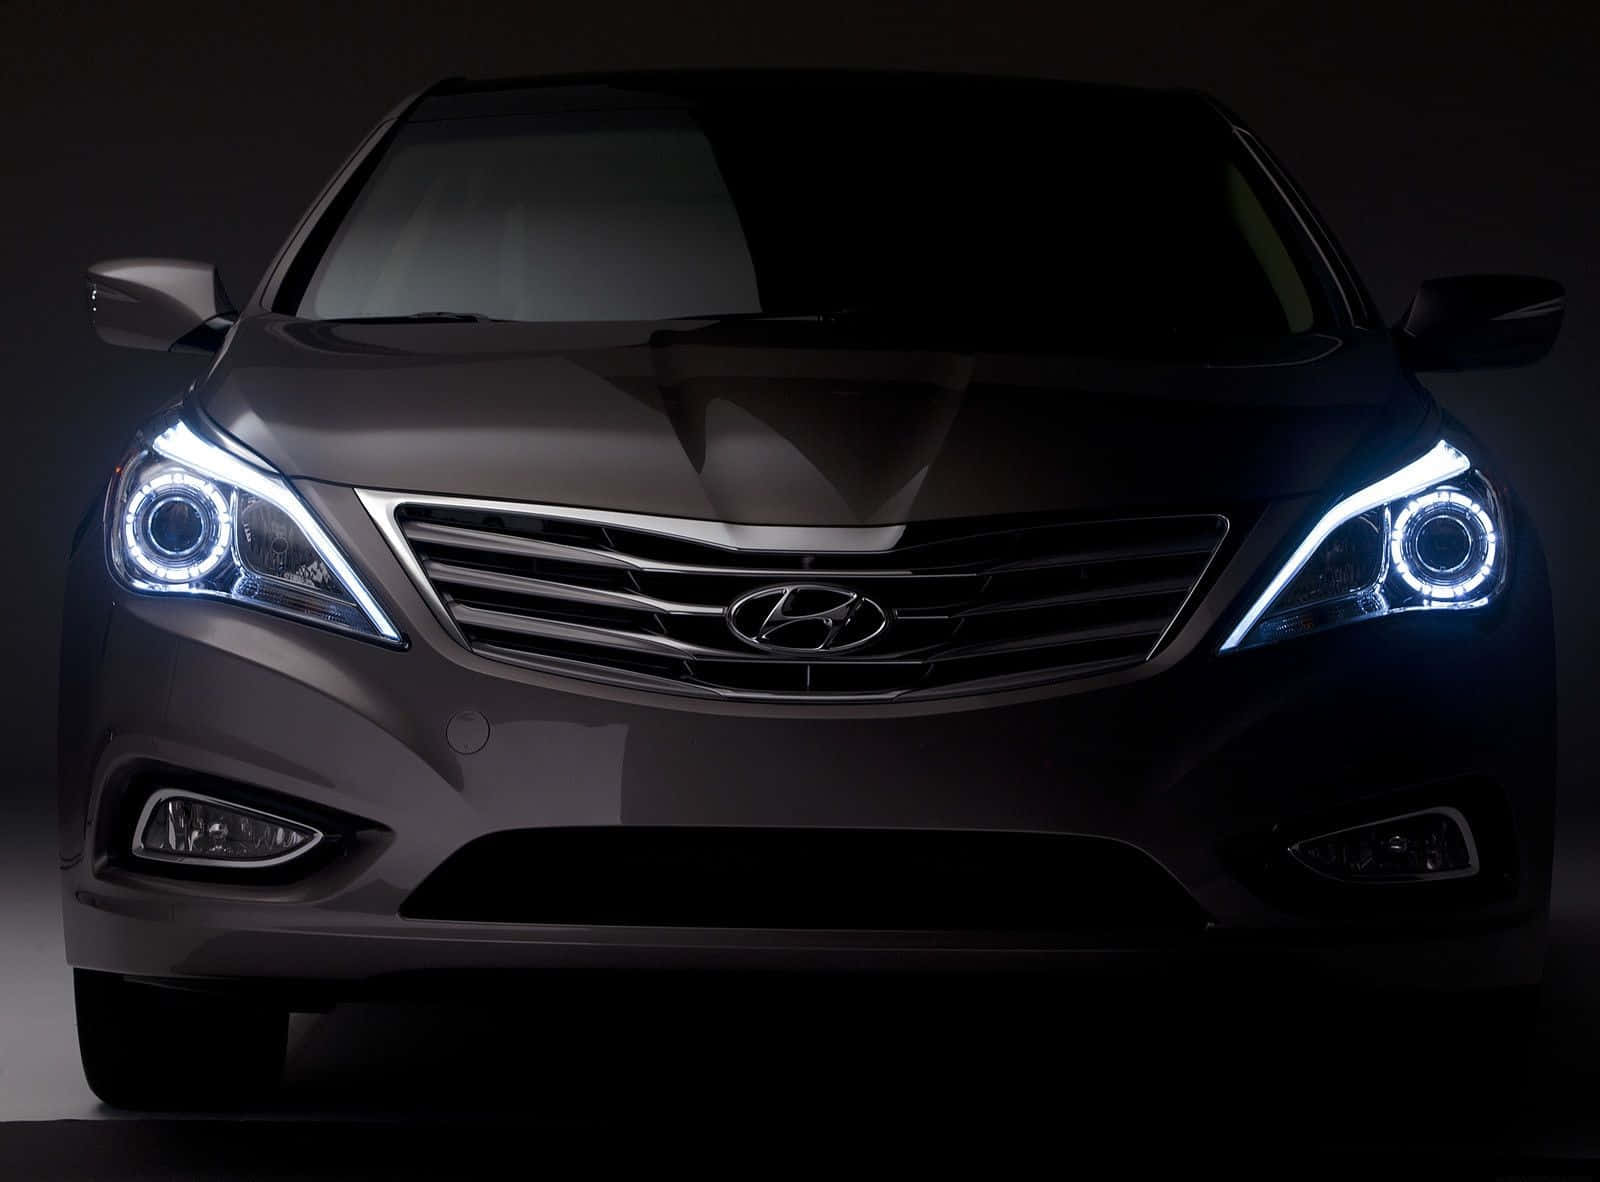 Stunning Hyundai Azera in Motion Wallpaper